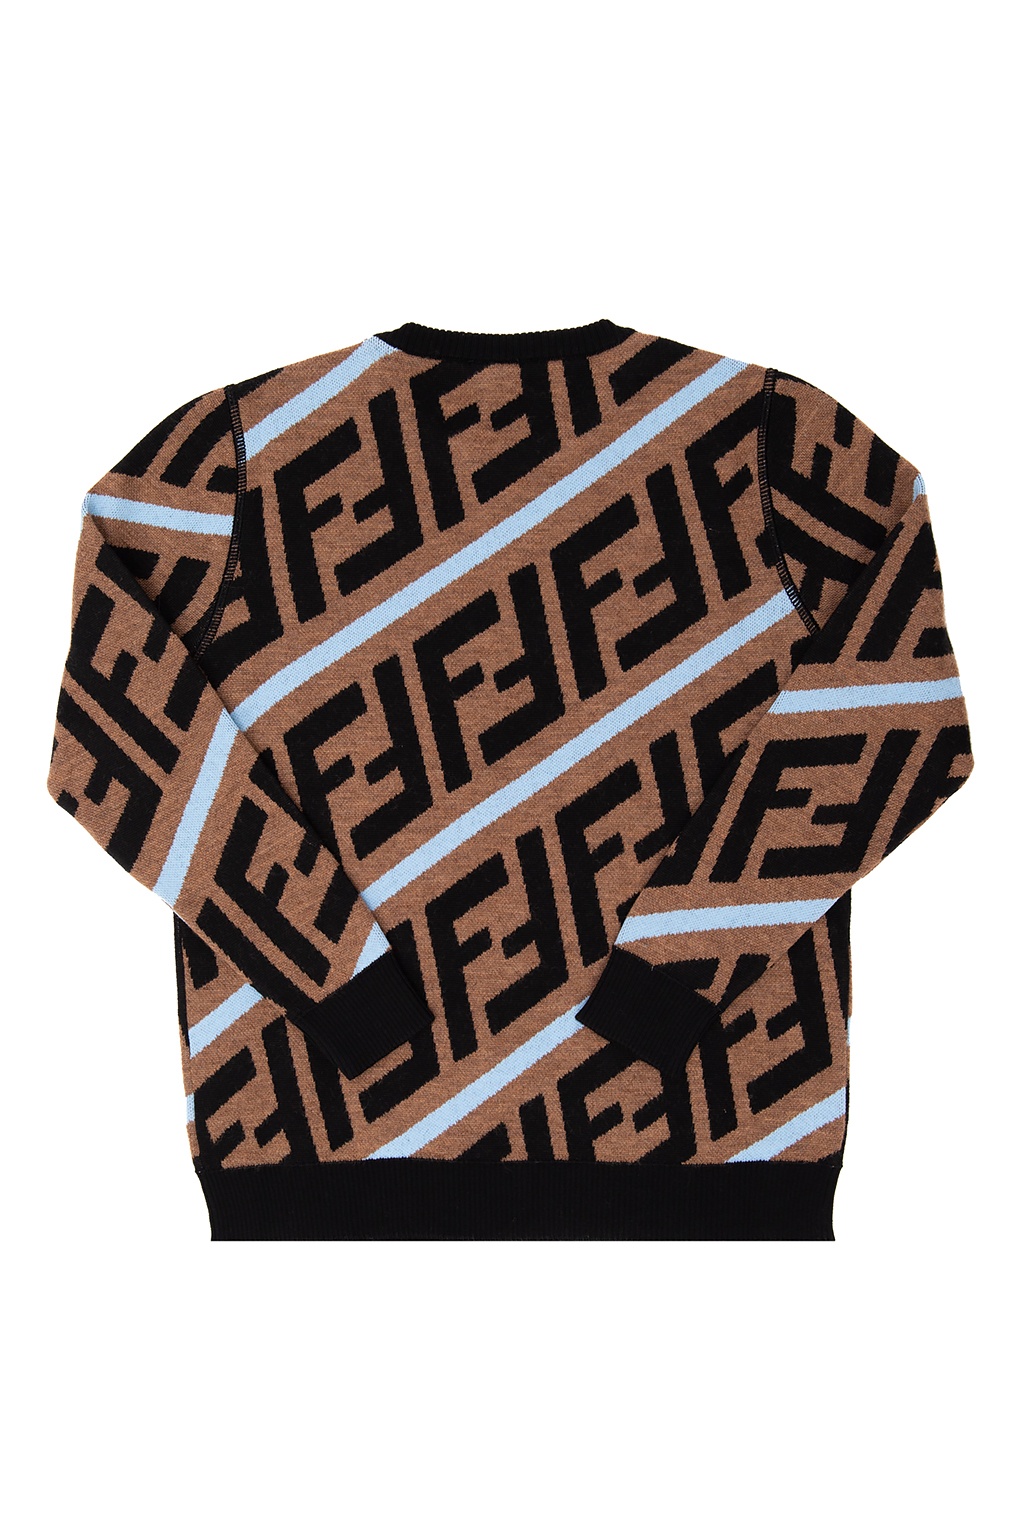 fendi CASUAL Kids Patterned sweater